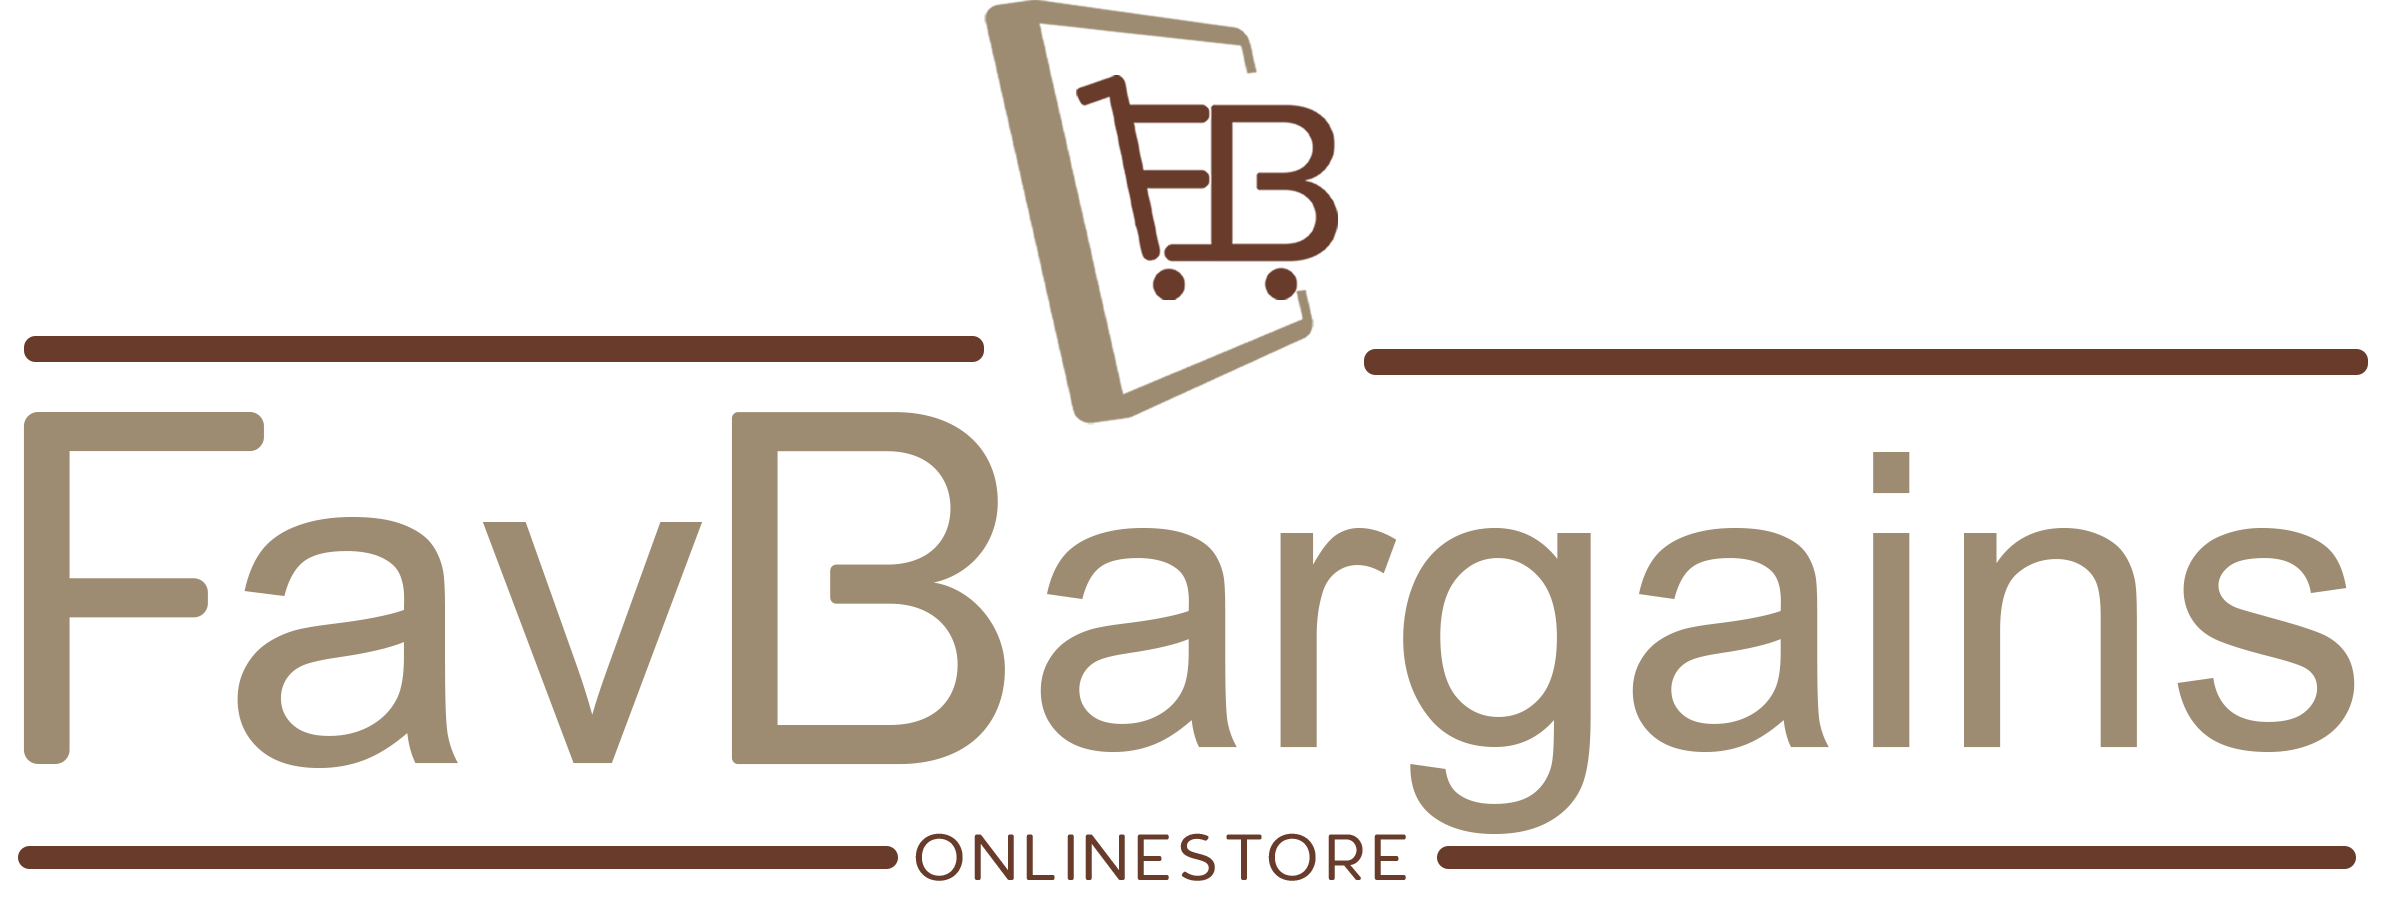 Favourite Bargains Online Store